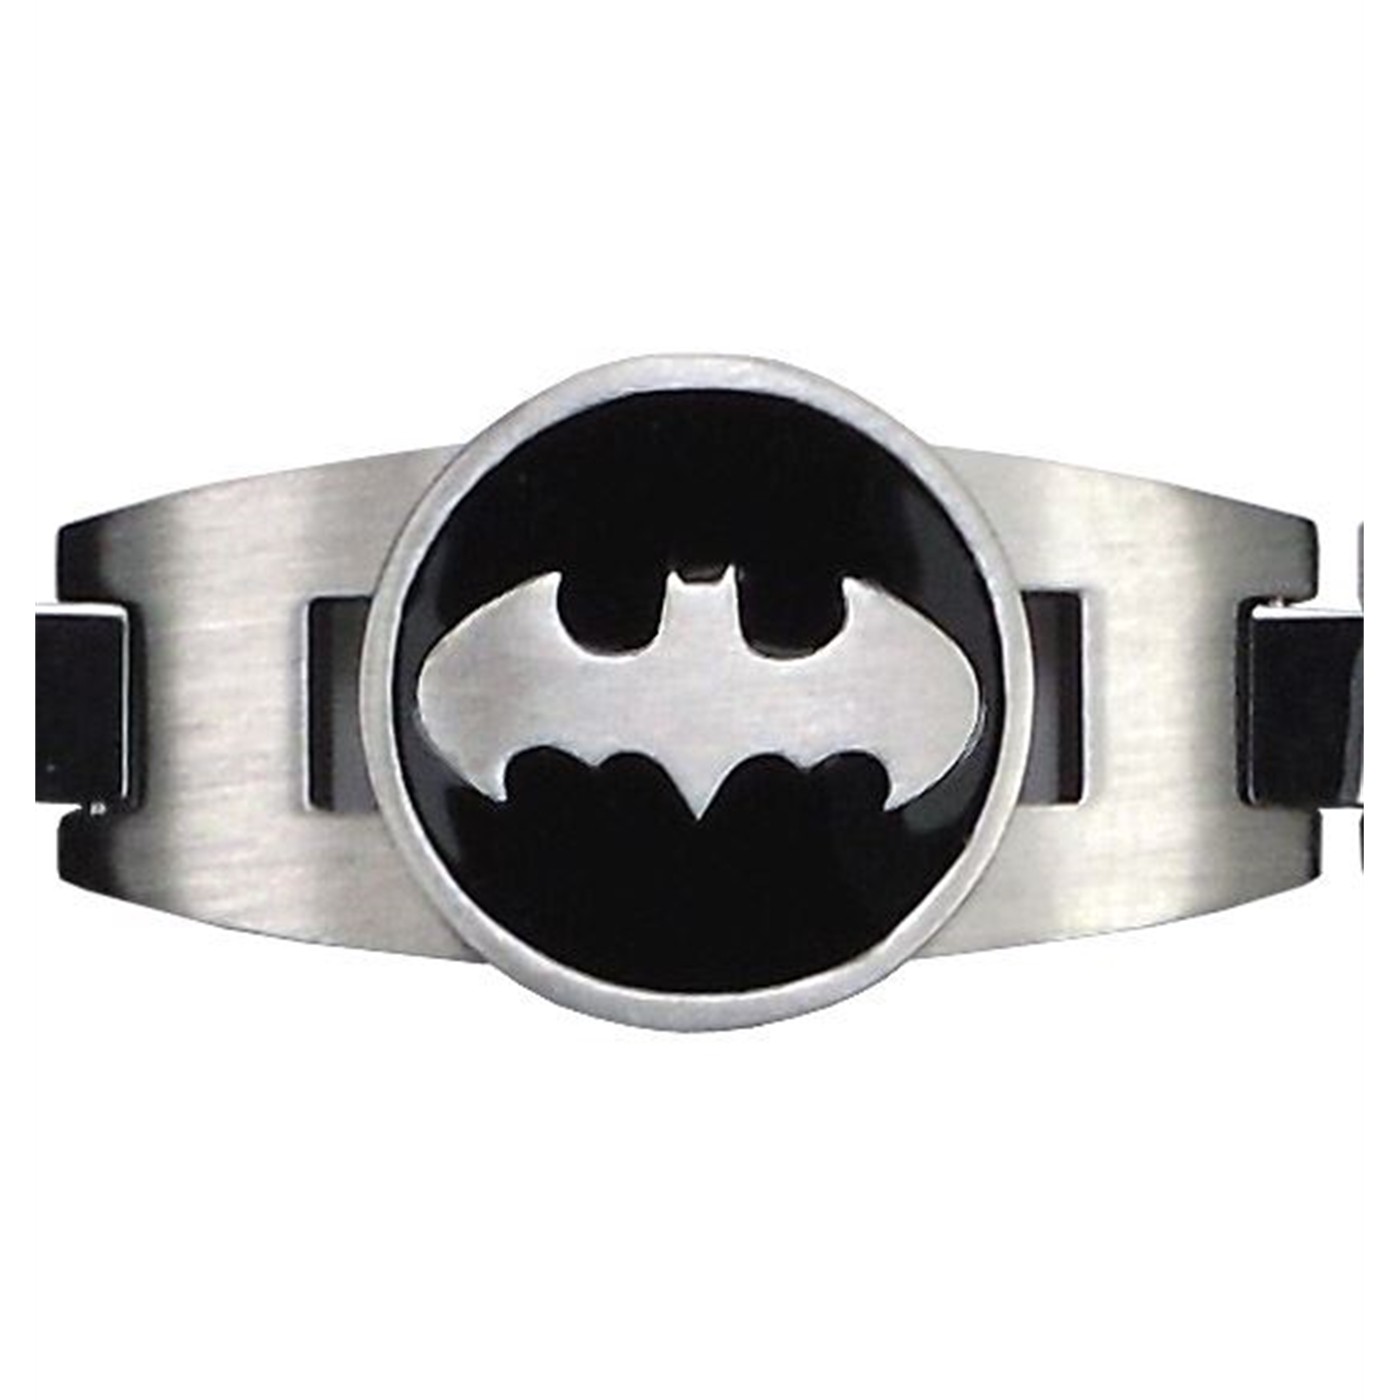 Batman Symbol Stainless Steel Bracelet